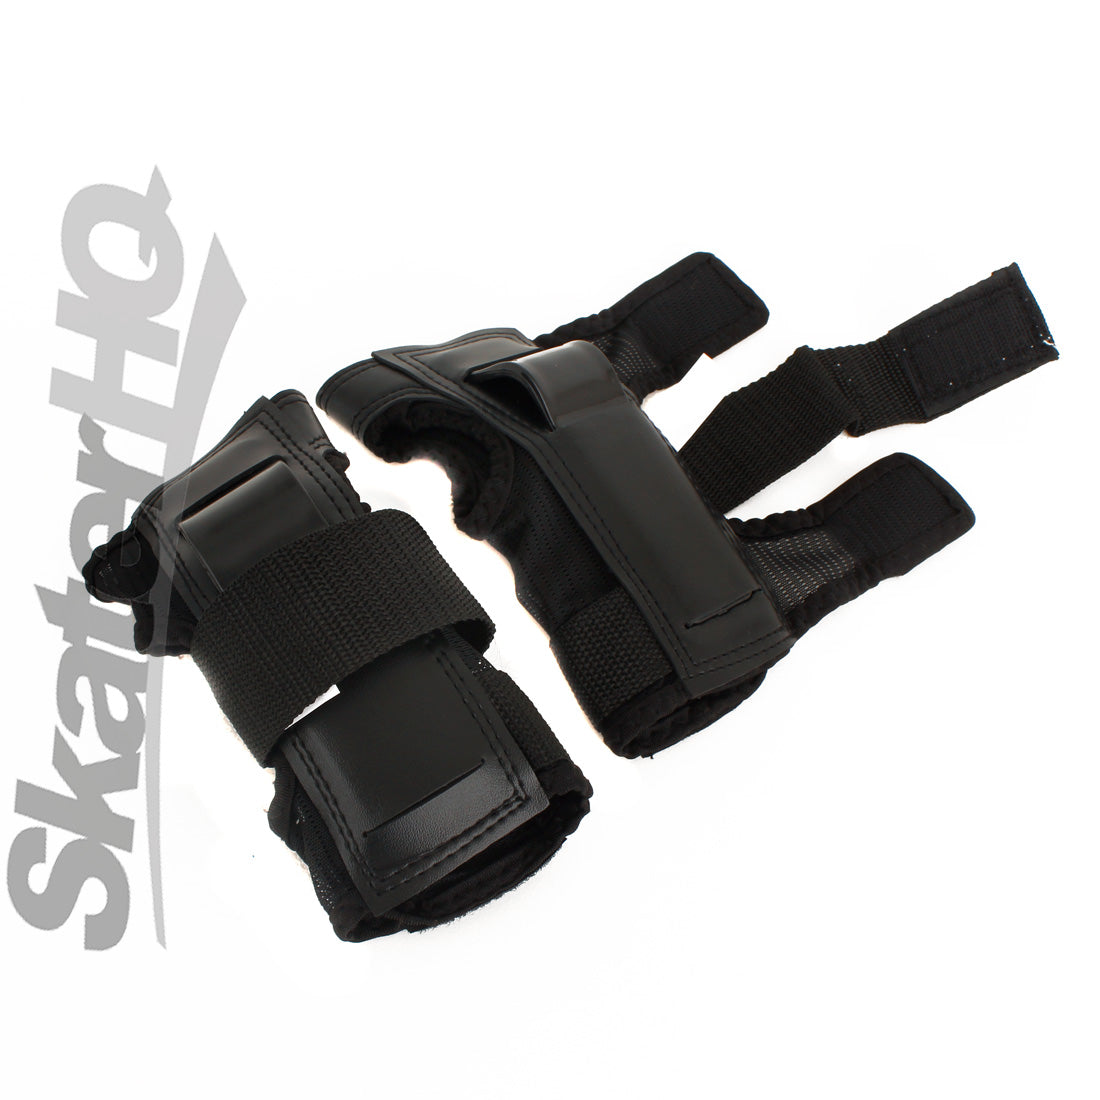 Skater HQ Wrist Guard - Small Protective Gear